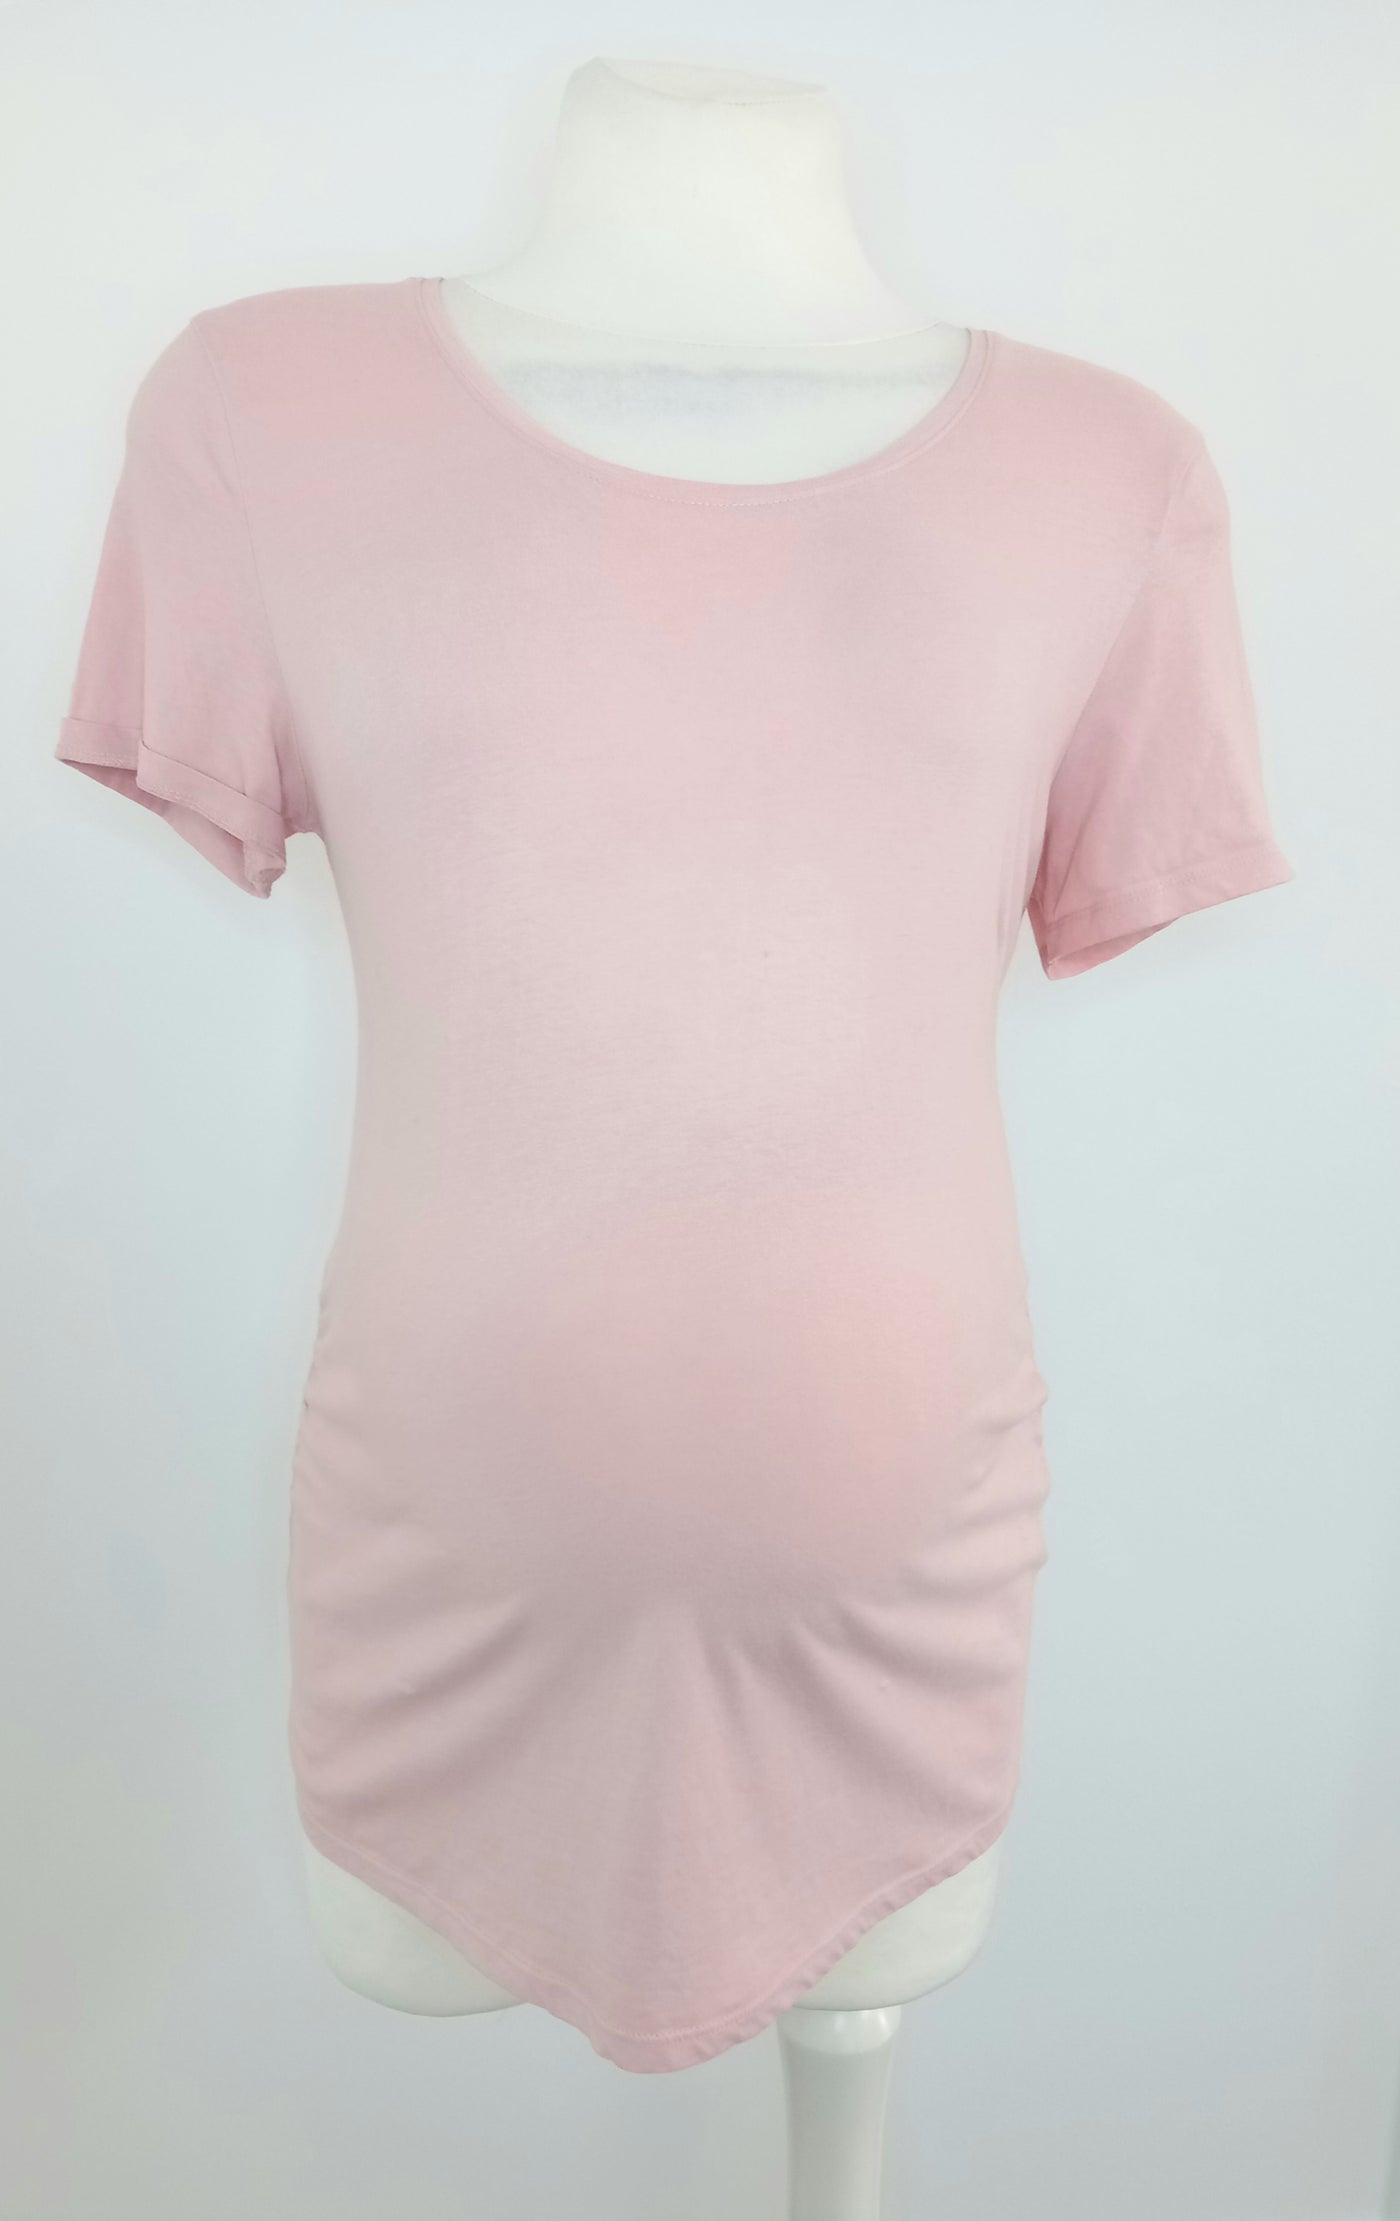 H&M Mama Light Pink T-Shirt Top - Size M (Approx UK 10/12)